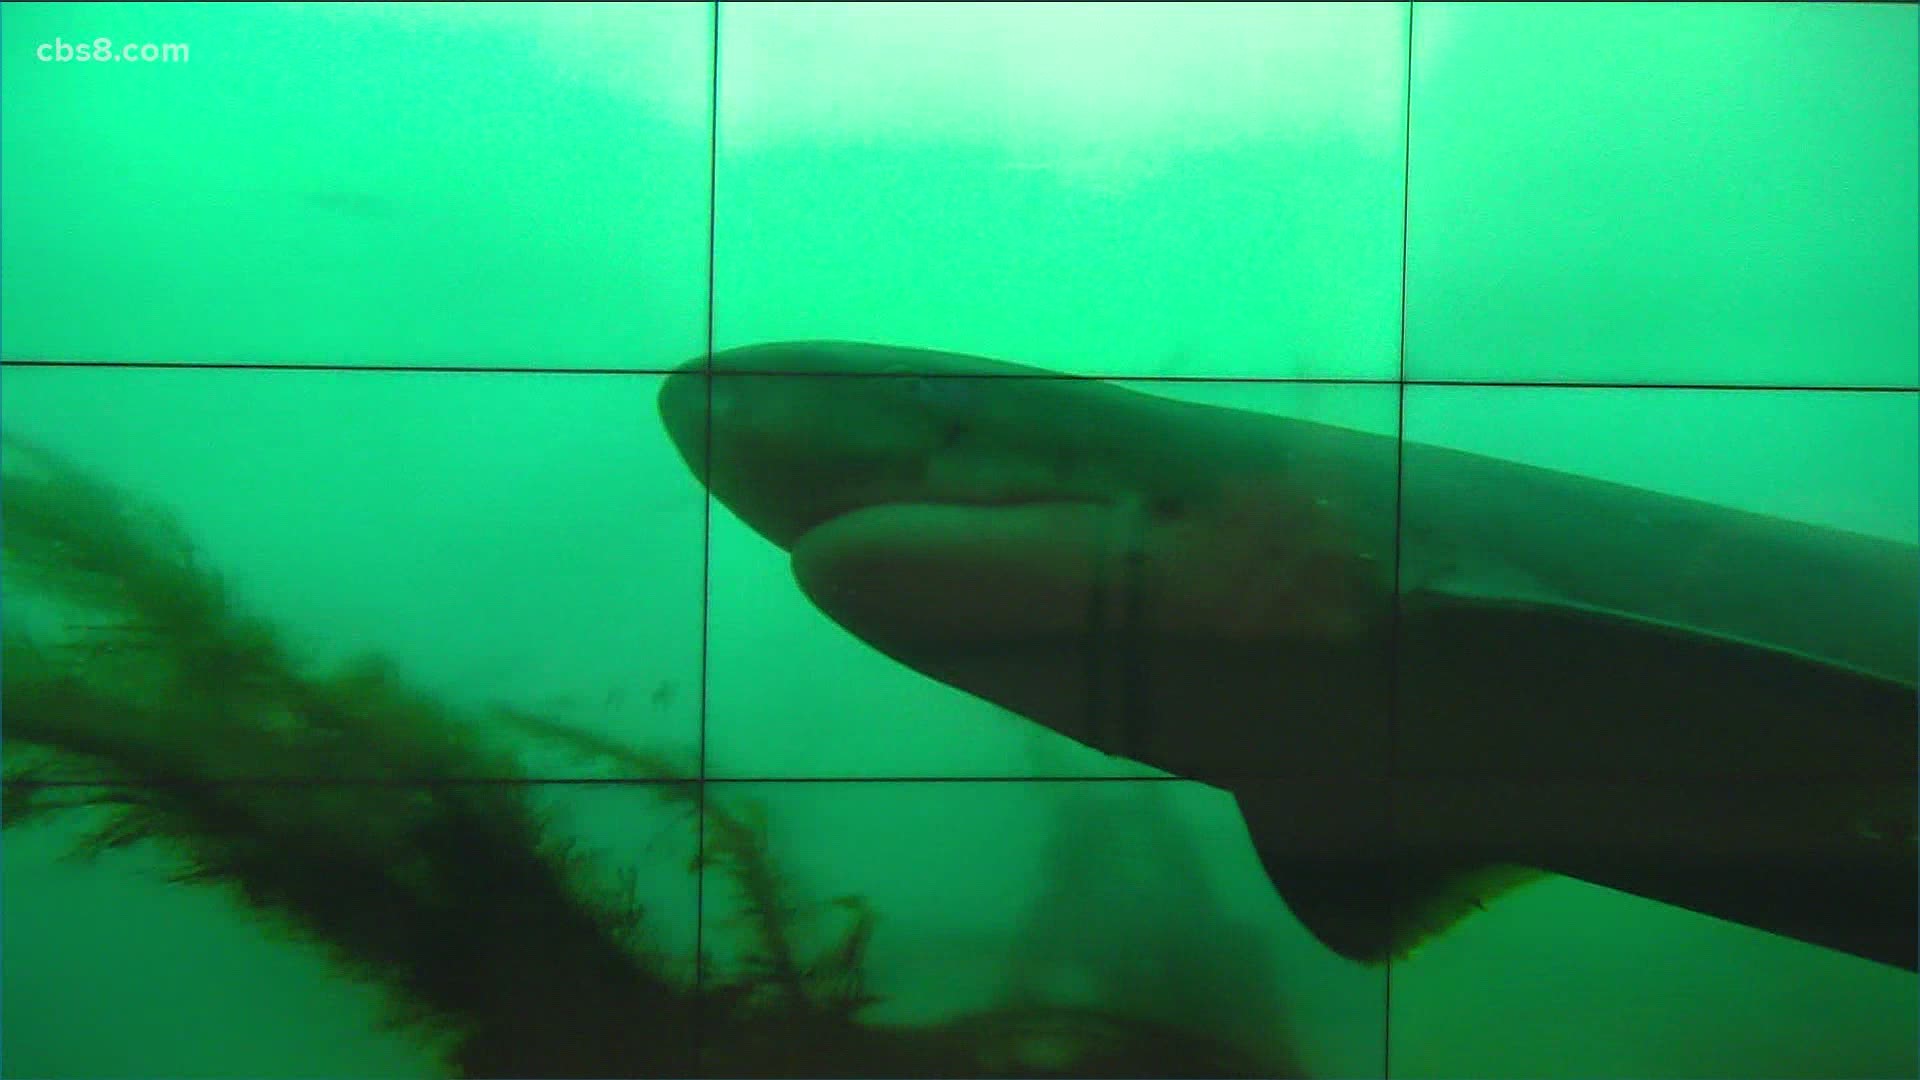 Among the sea life: a sevengill shark and black sea bass.